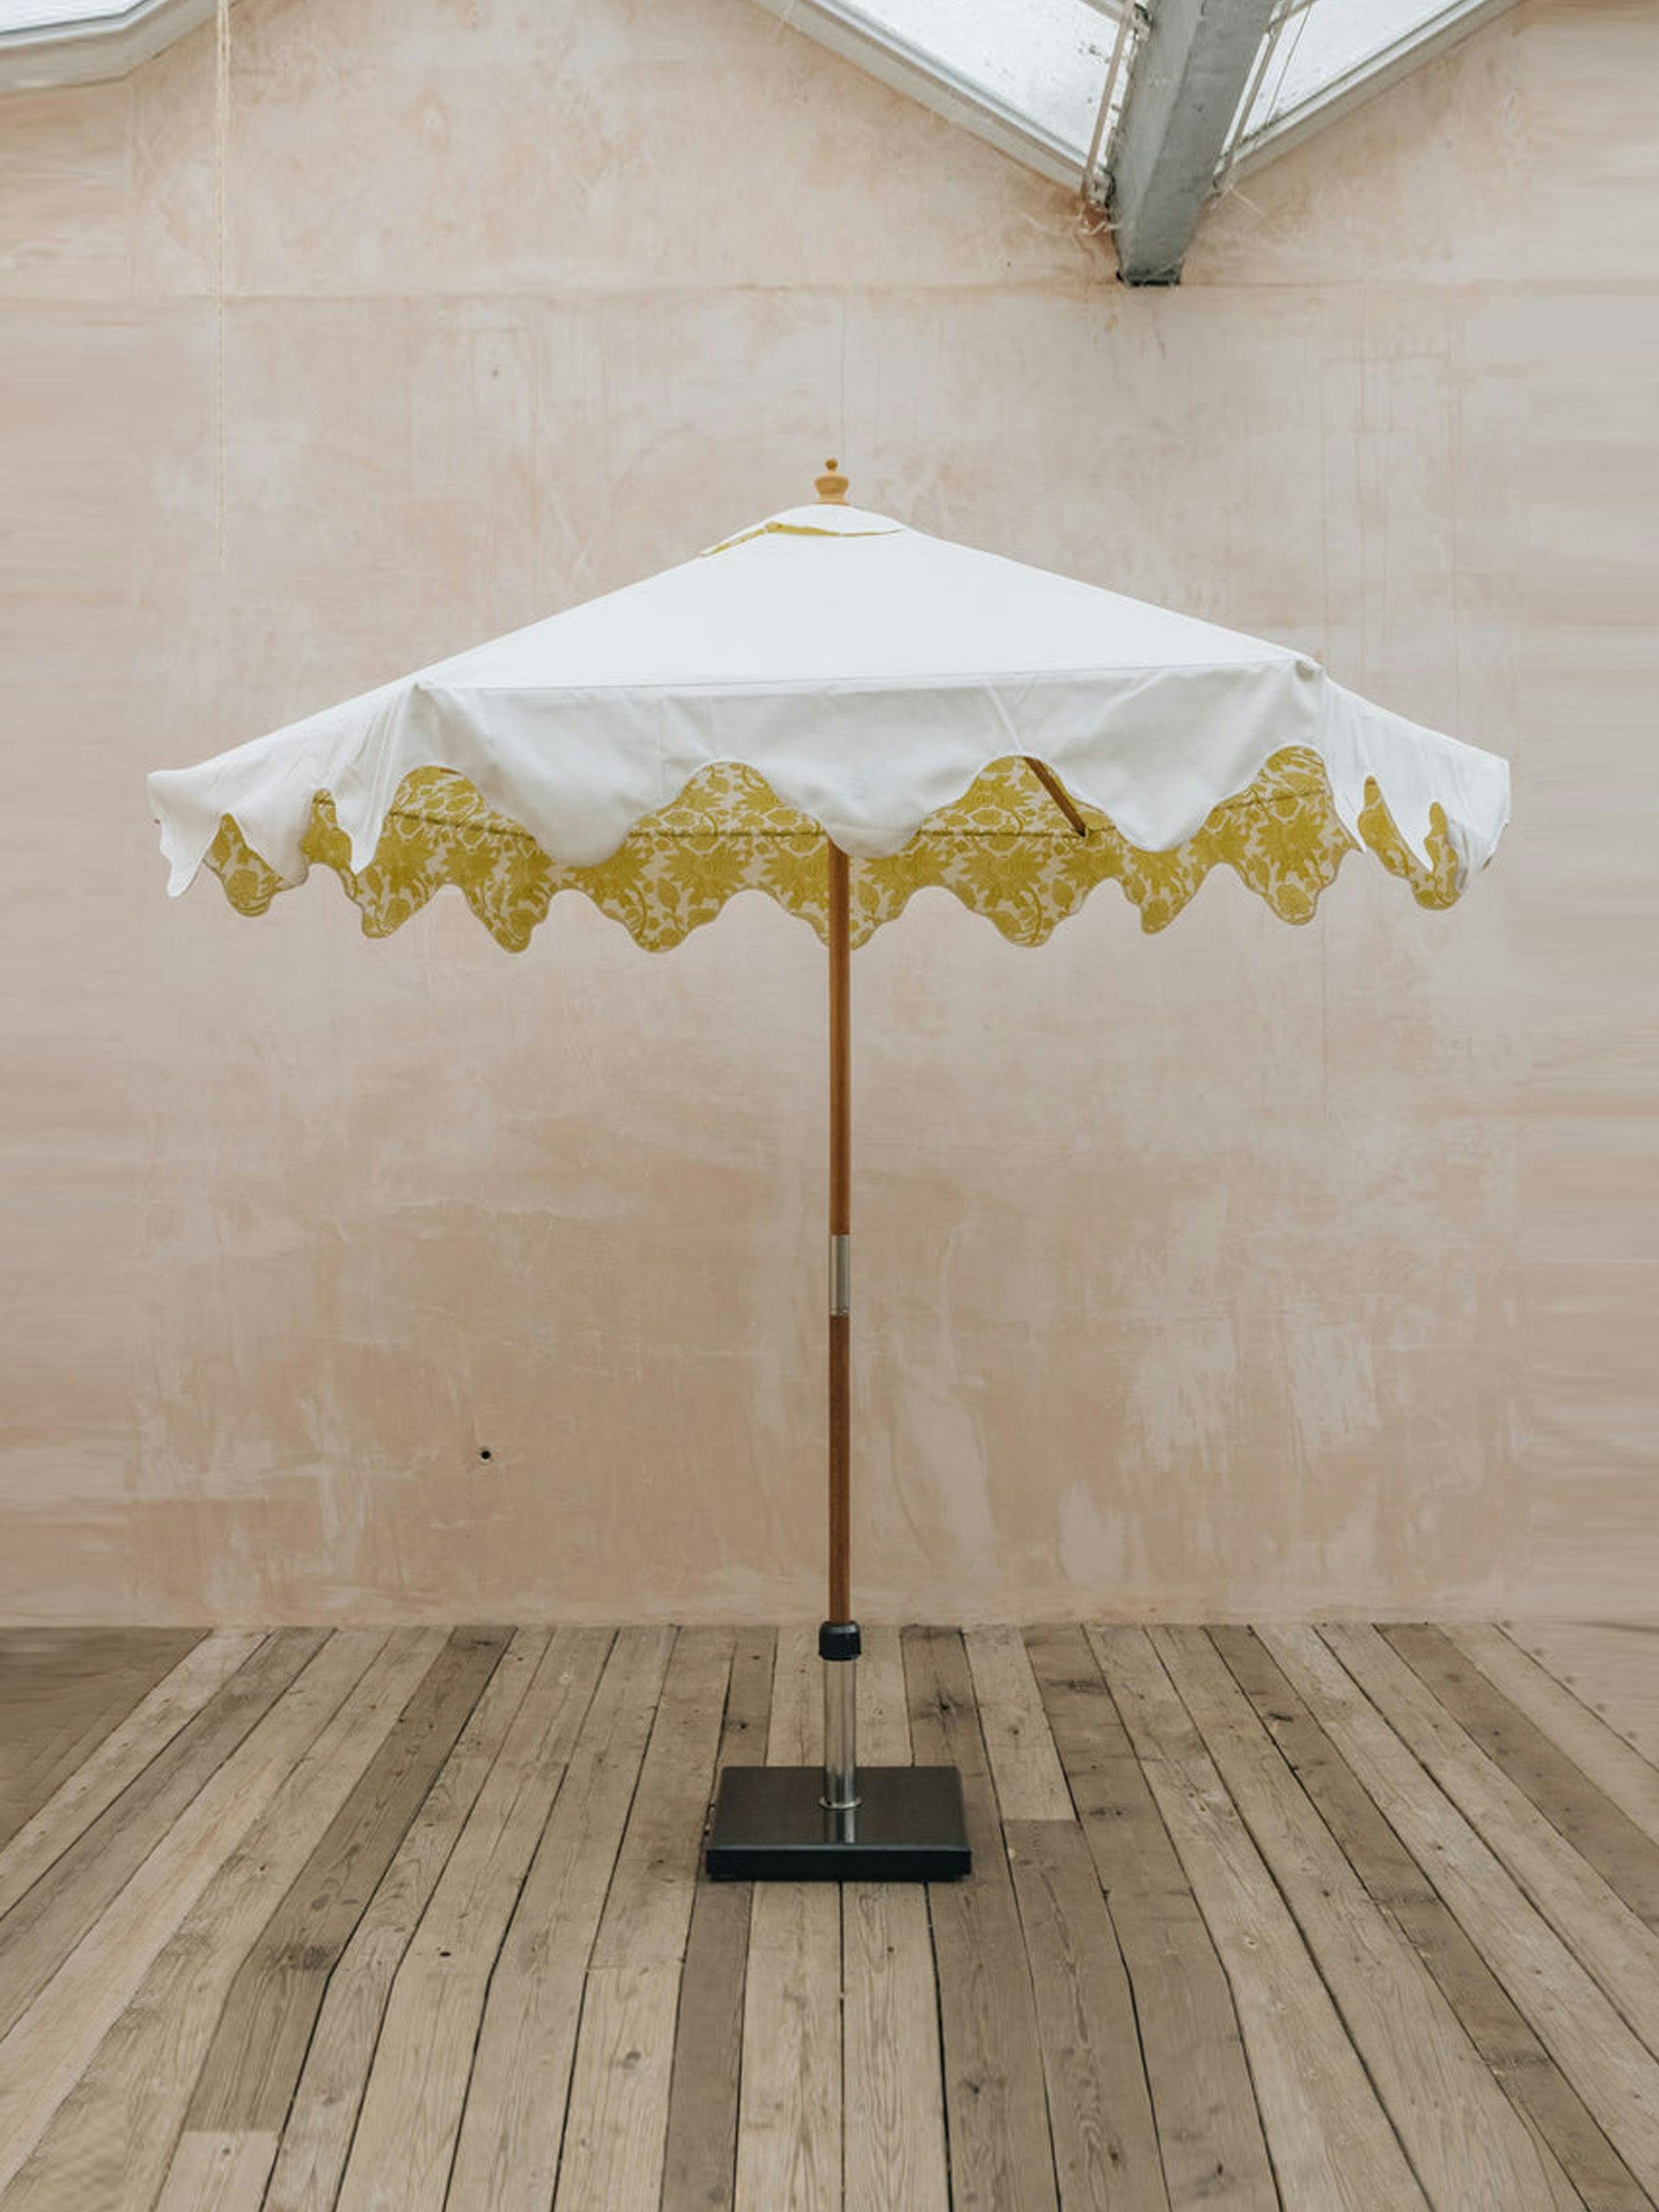 White and yellow parasol